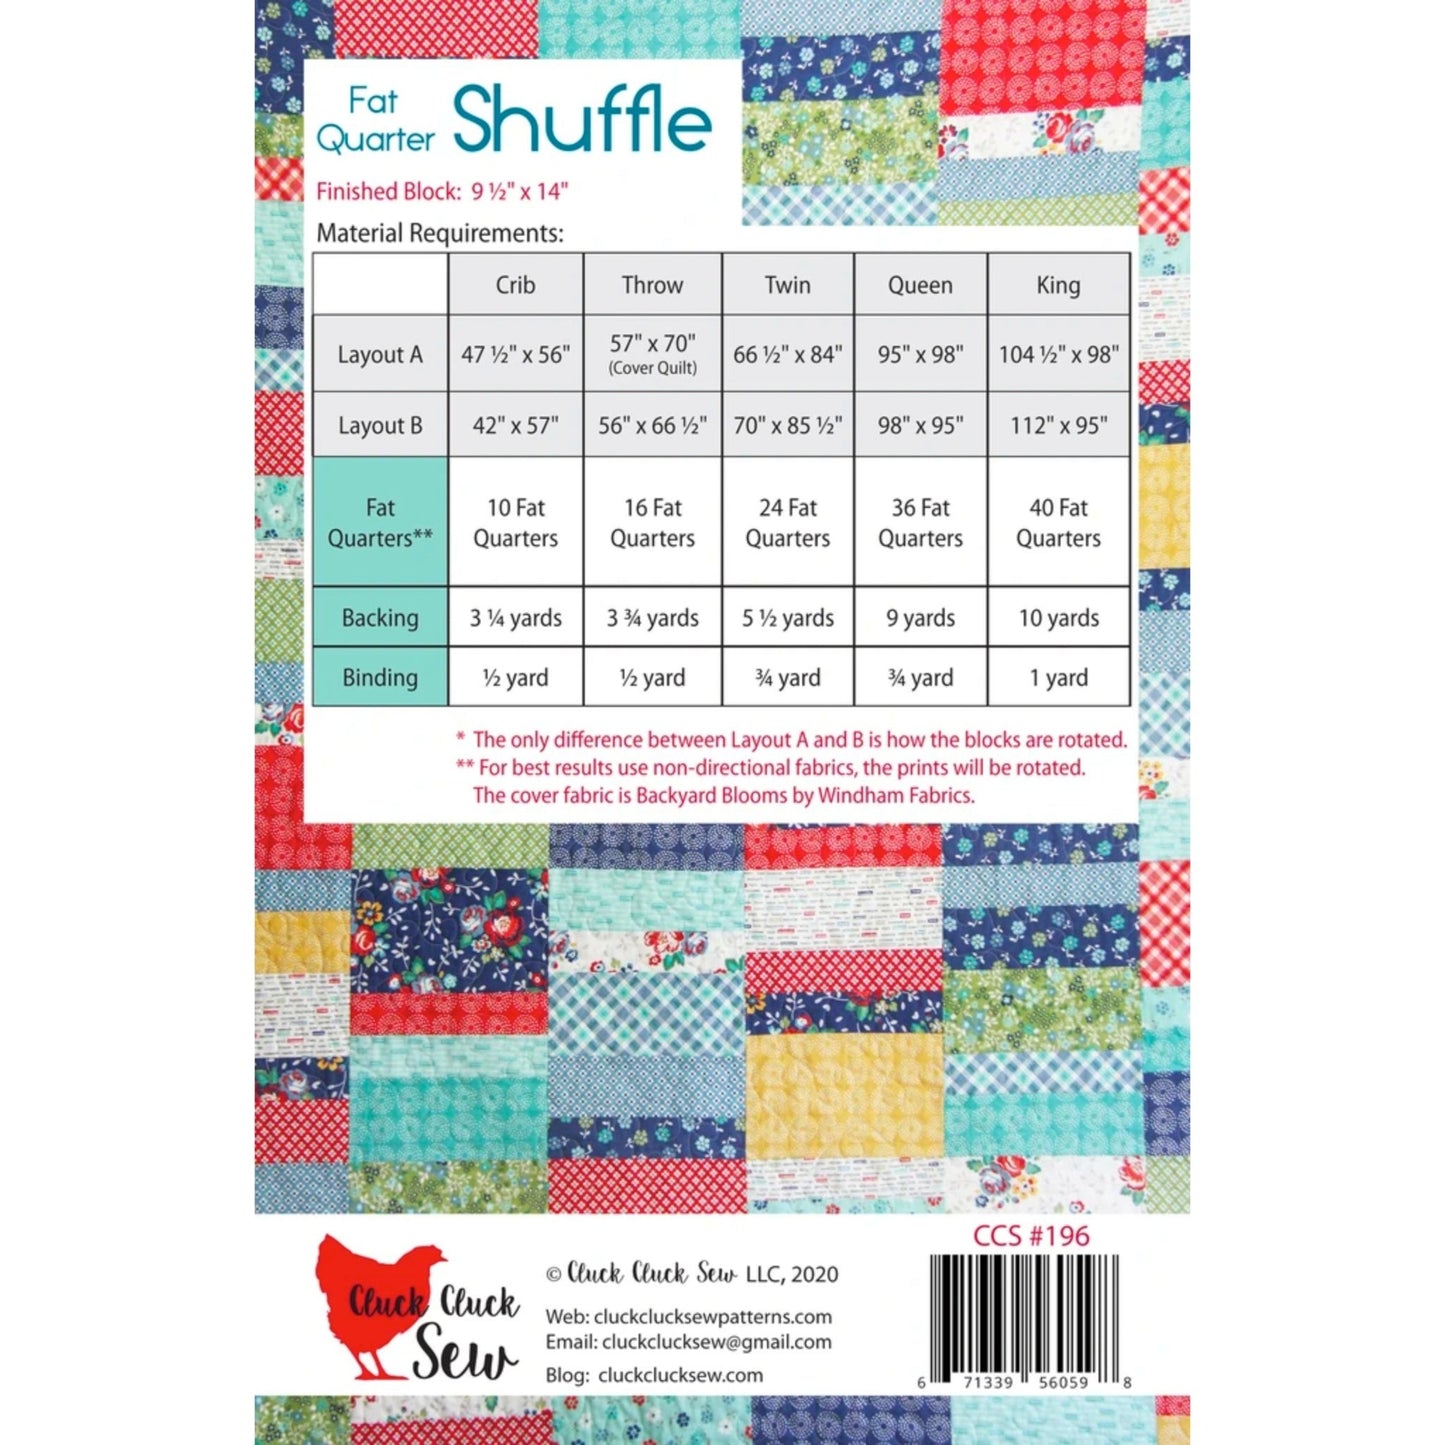 Fat Quarter Shuffle Quilt Pattern by Cluck Cluck Sew - Jammin Threads